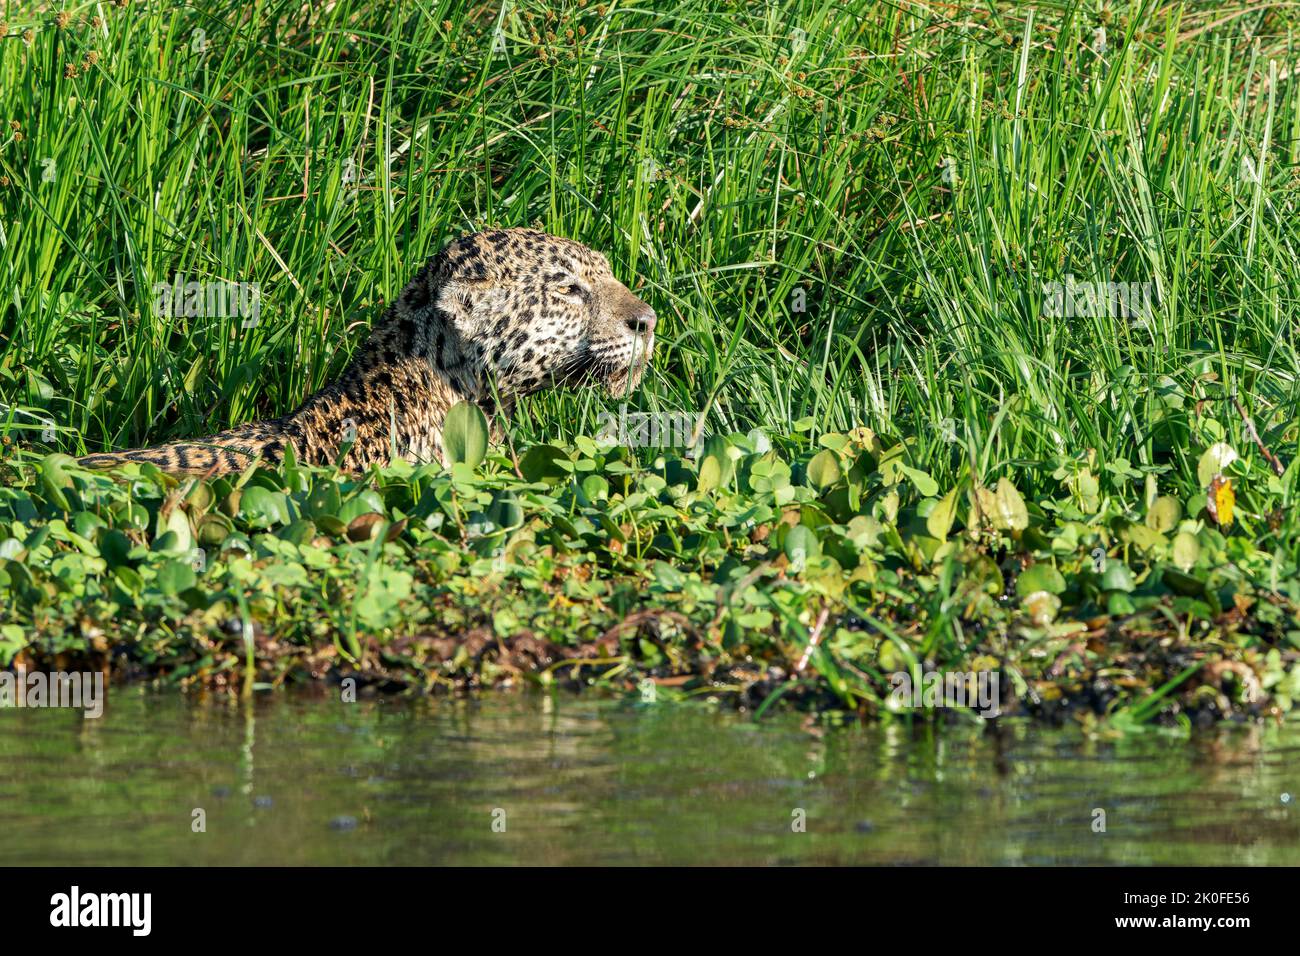 Jaguar, Panthera onca, adulto singolo che nuota in acqua, Pantanal, Brasile Foto Stock